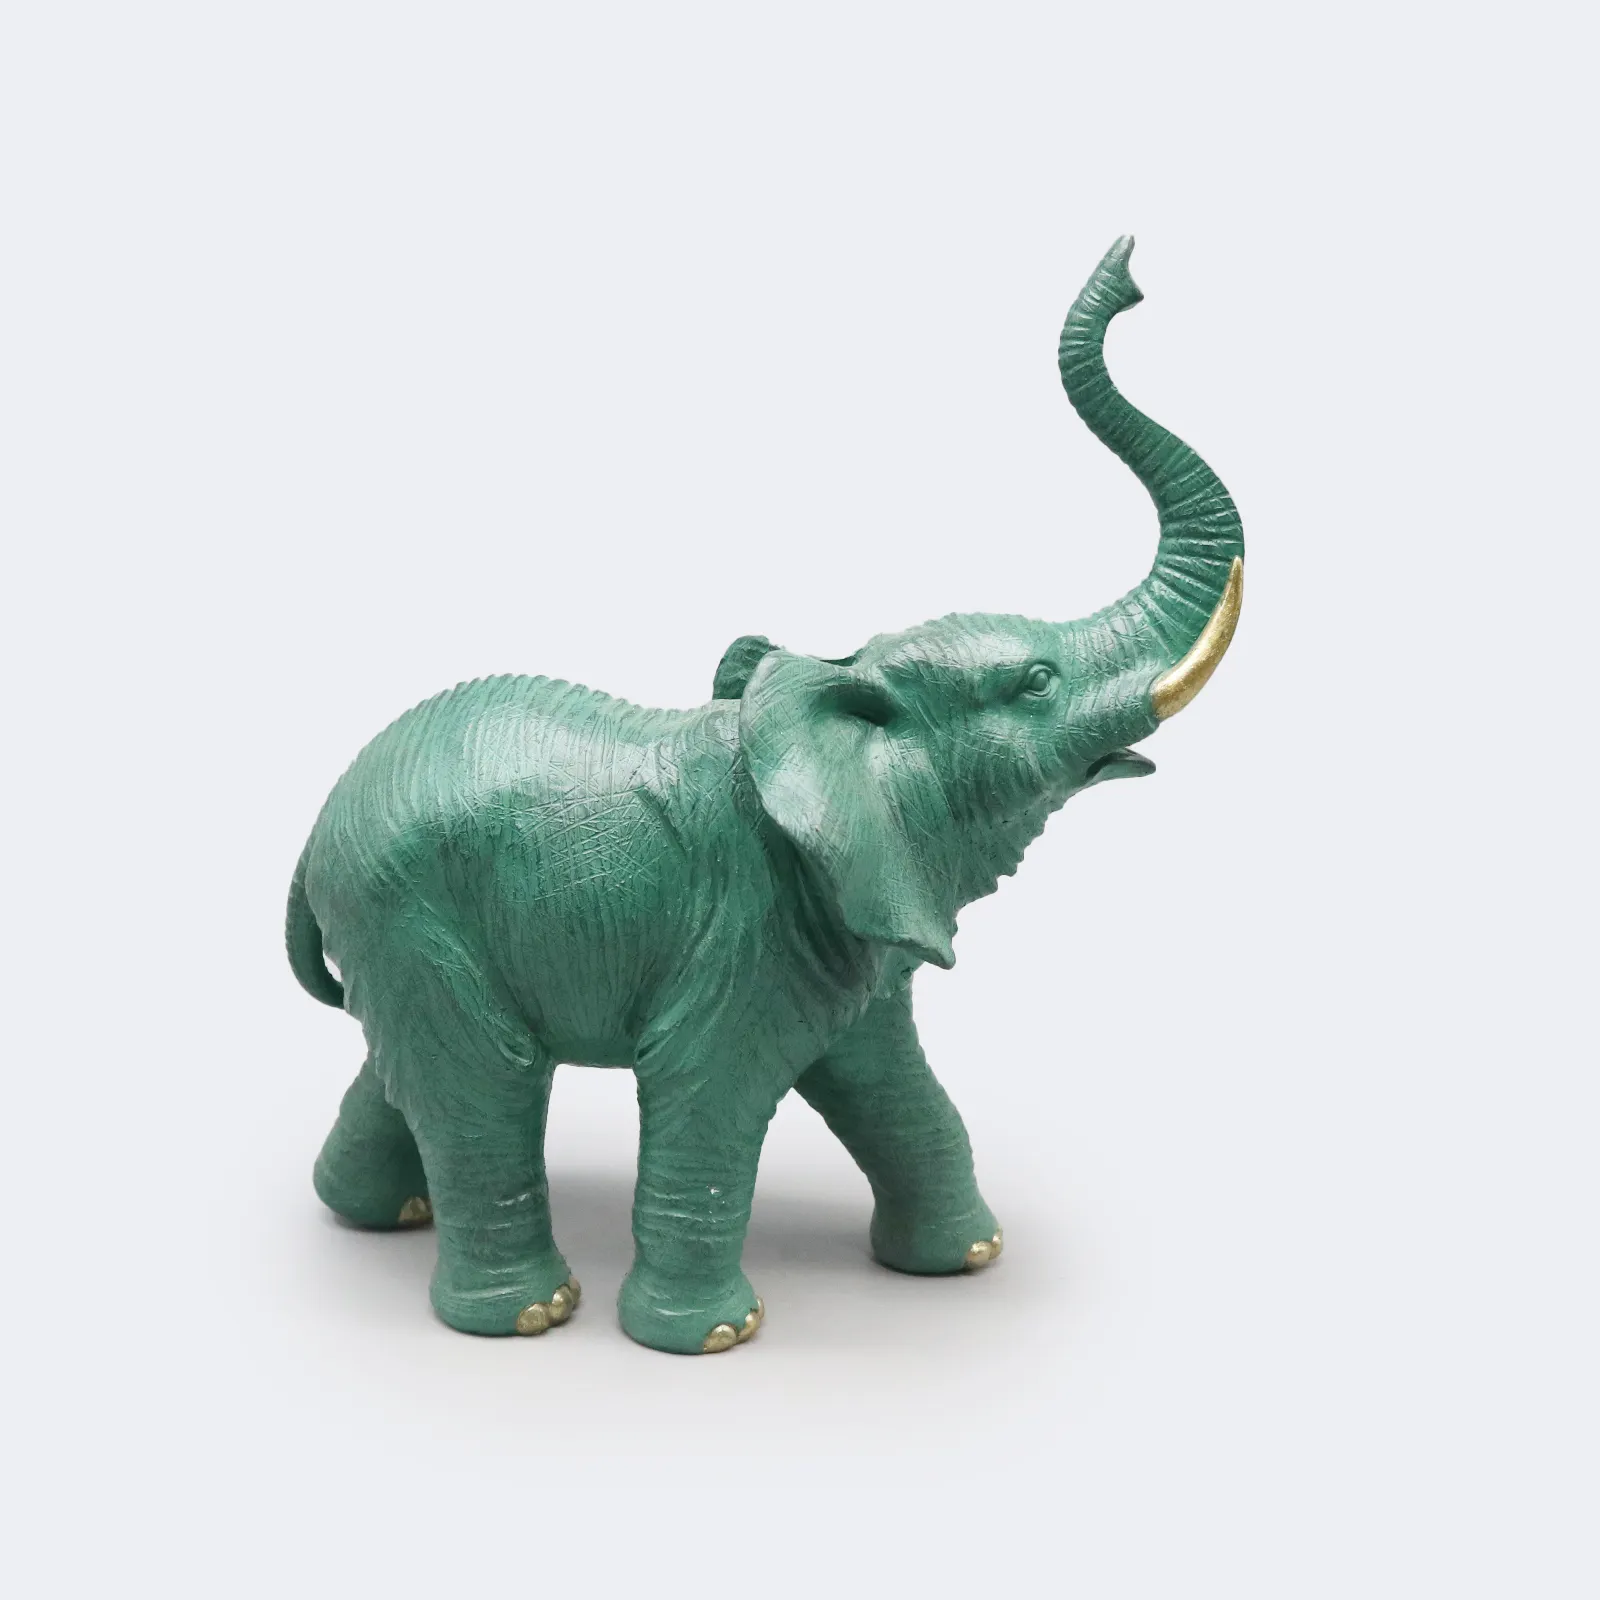 New resin elephant figurine life size elephant statues